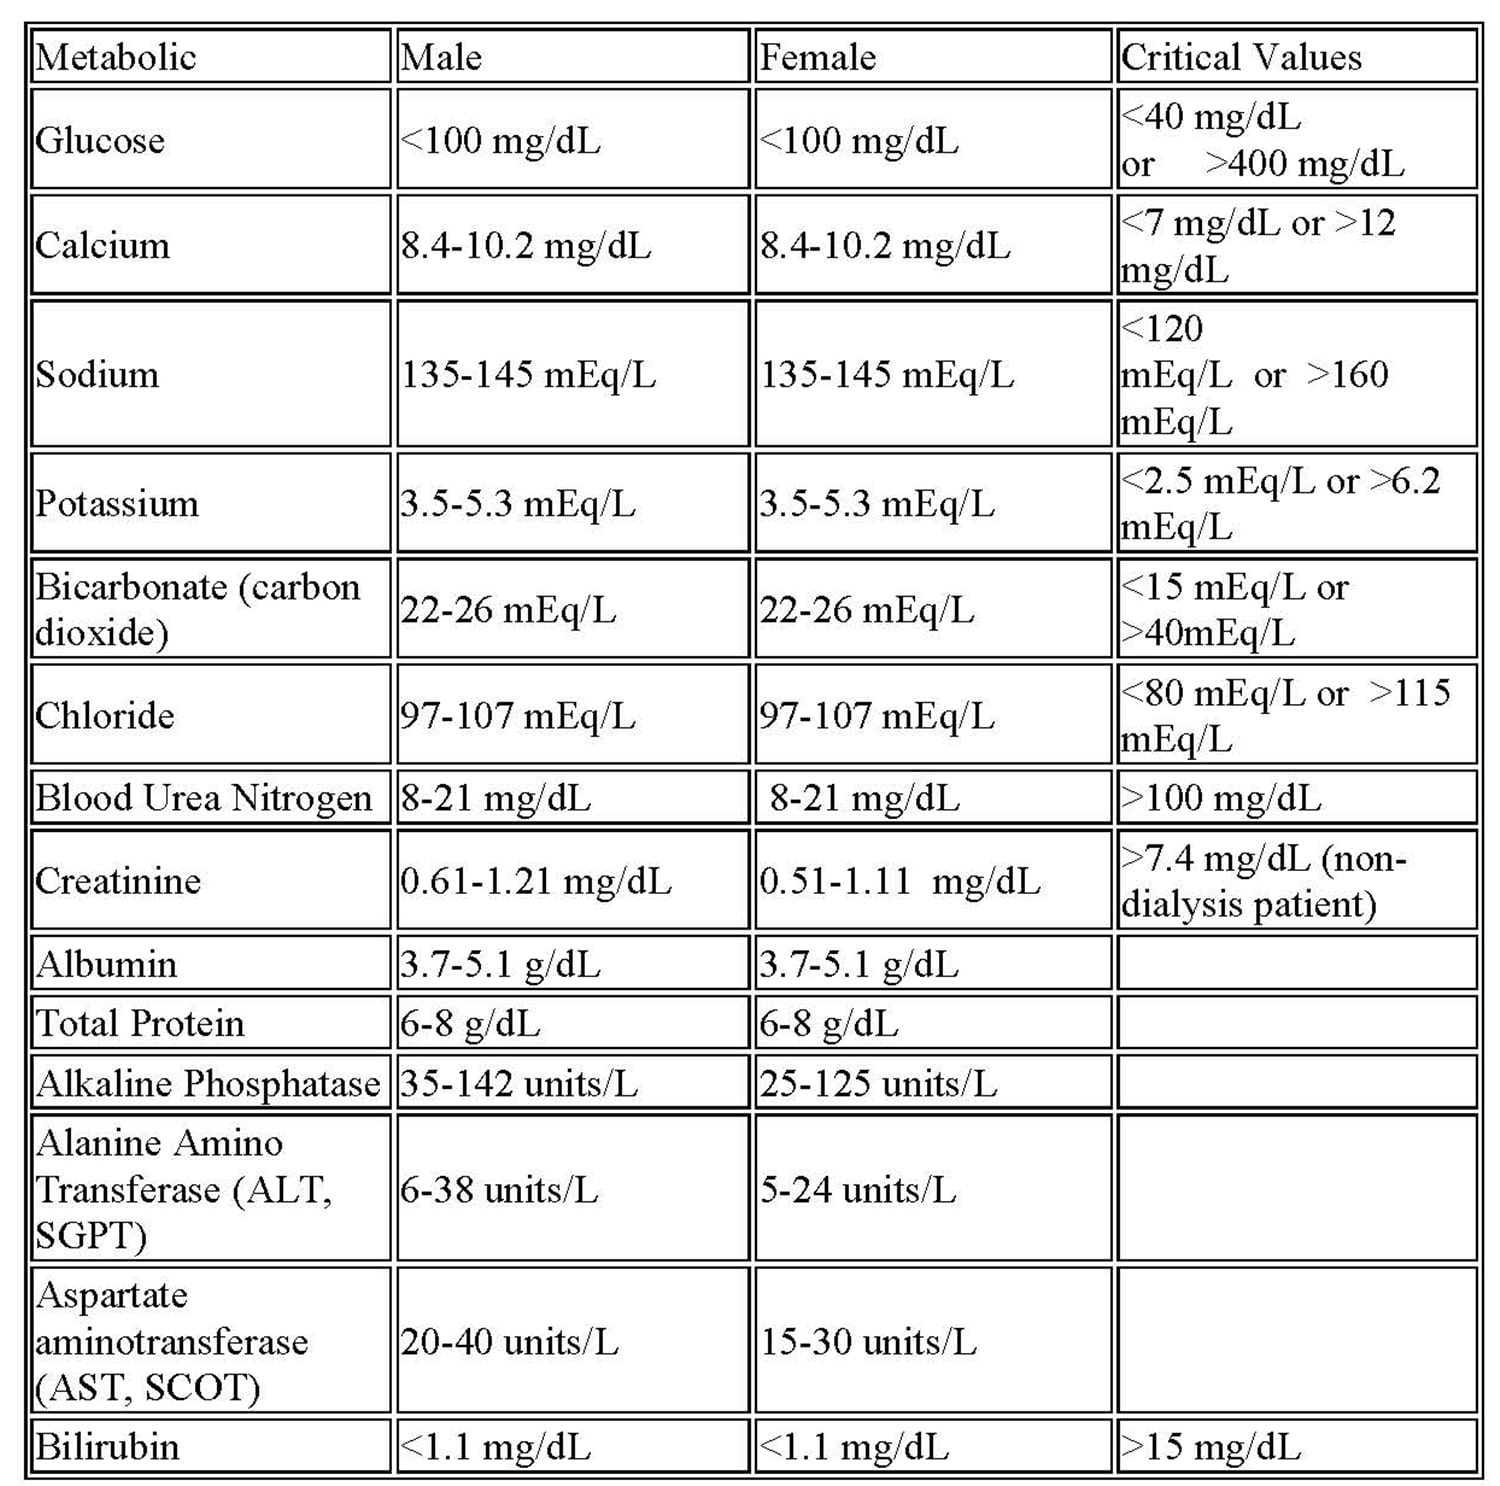 Metabolic panel values